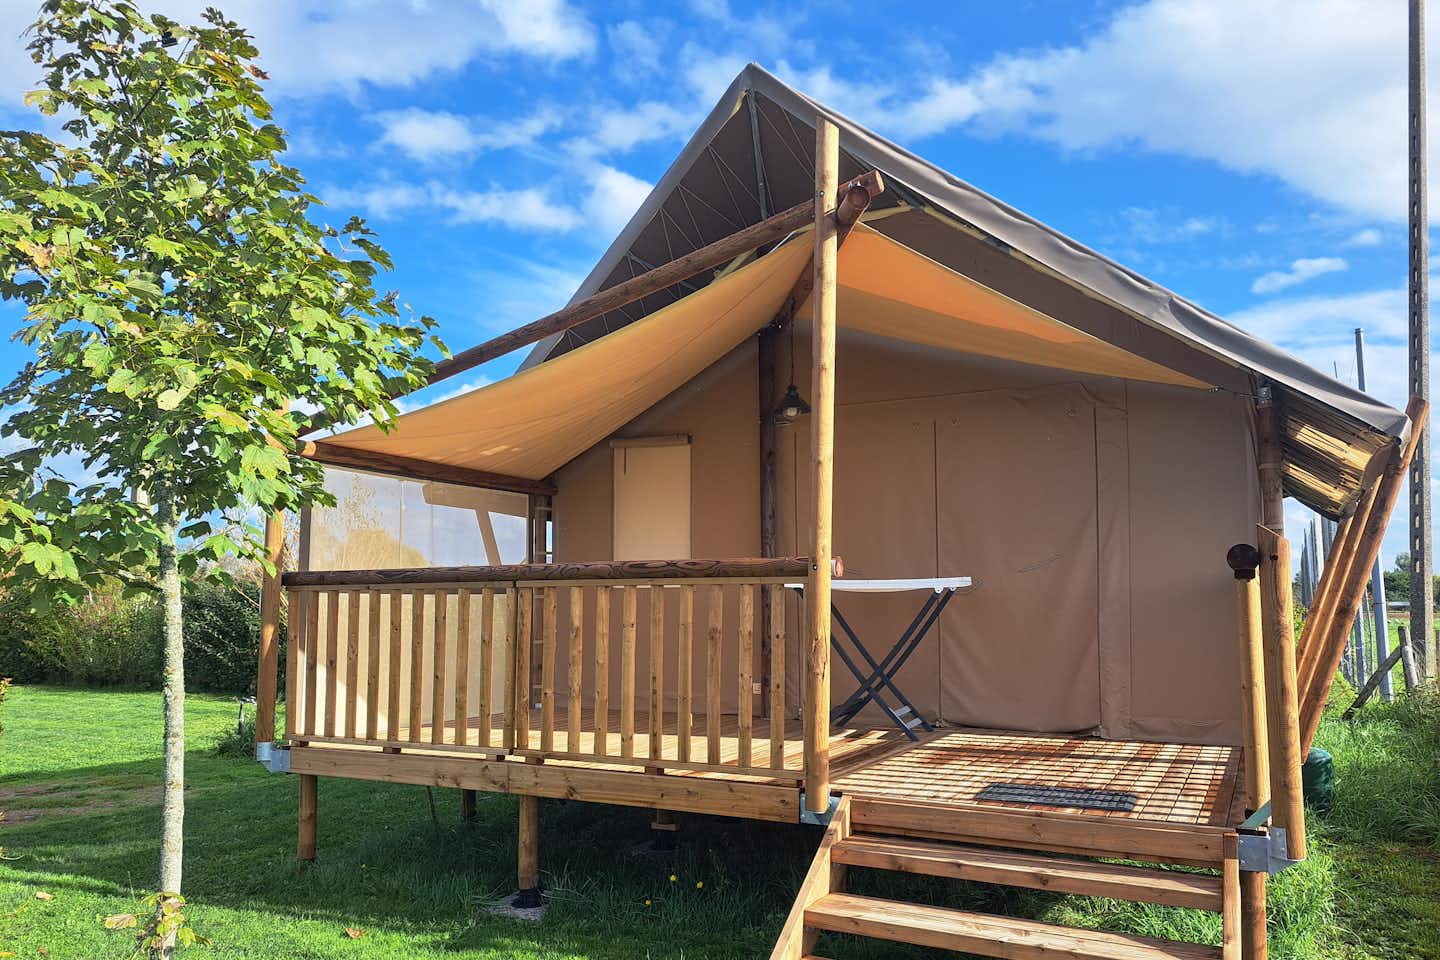 Camping Loire et Châteaux - Safarizelt-Mietunterkunft mit Privatsanitär